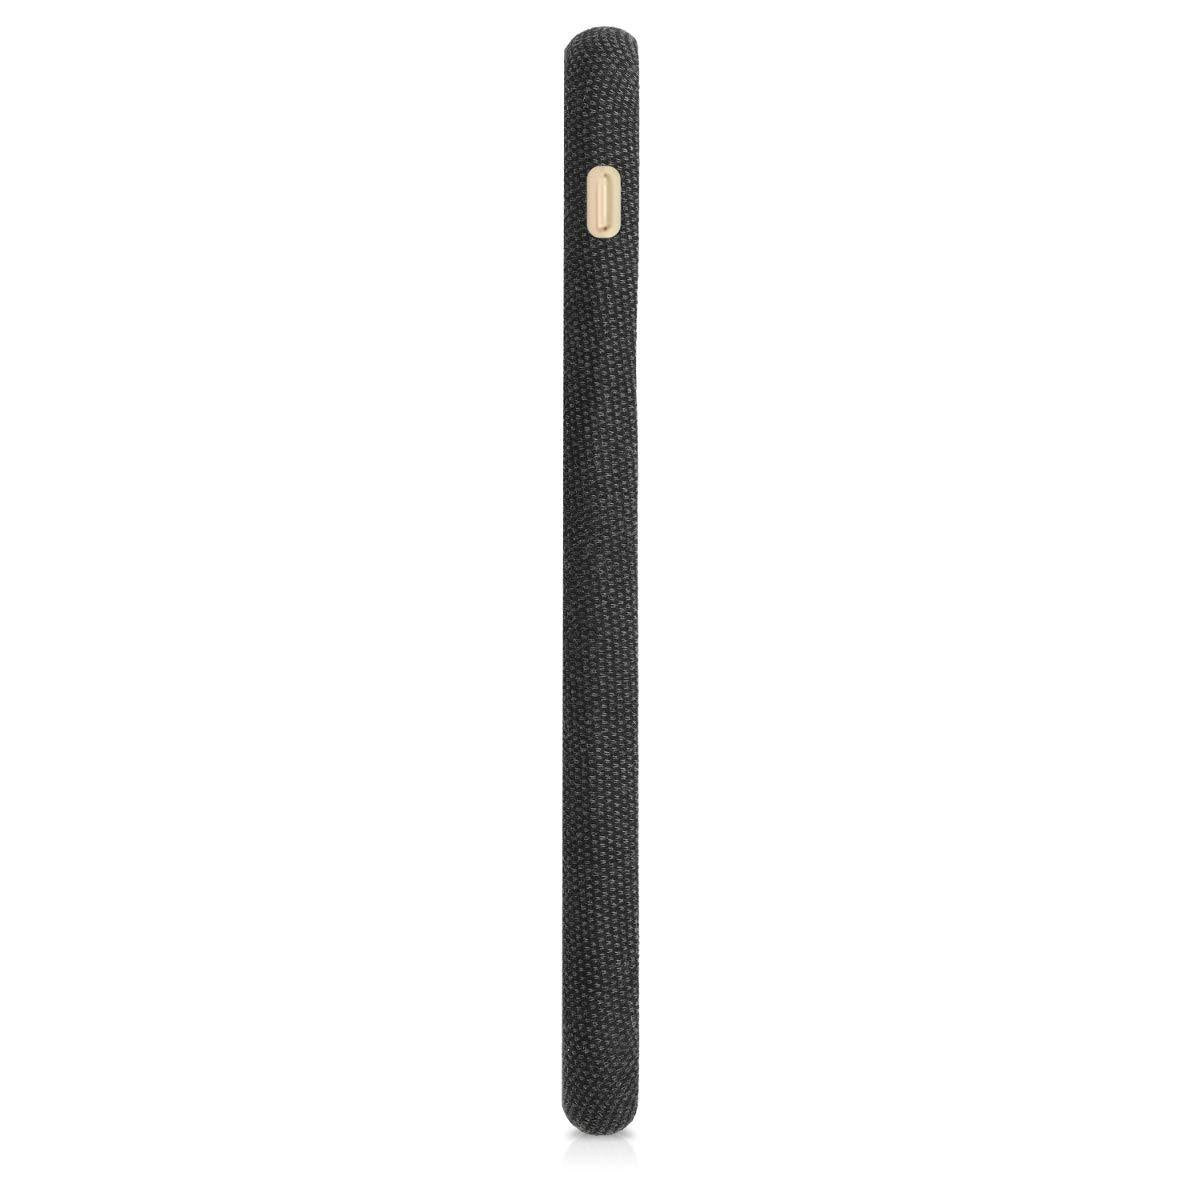 Black Fabric Case - iPhone 11 Pro Max - Mobilegadgets360